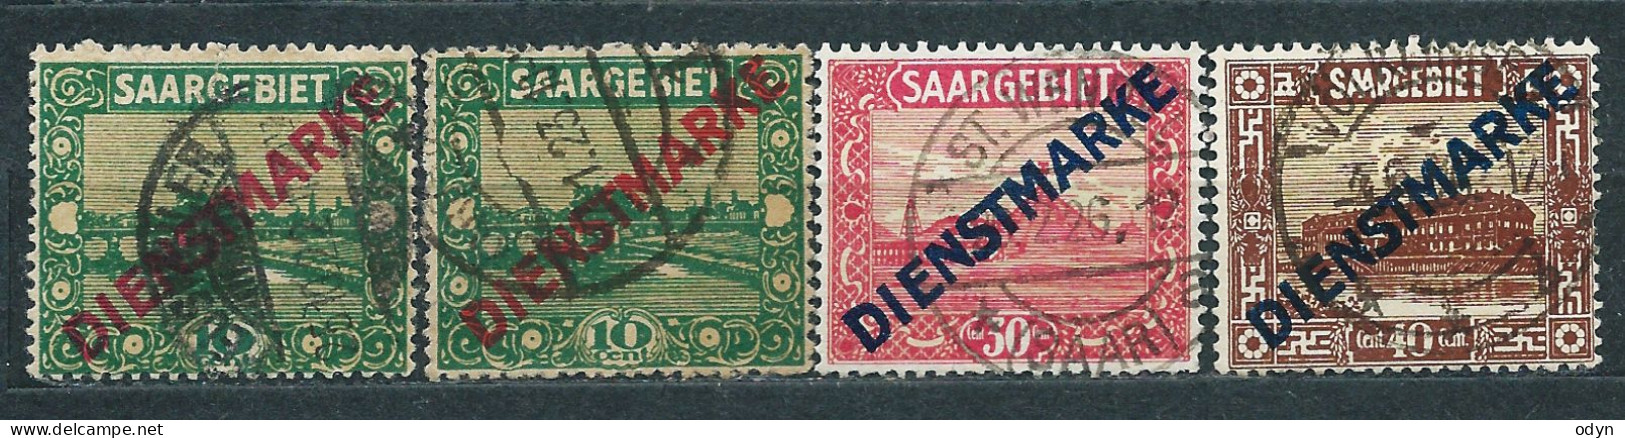 Saargebiet Dienstmarken 1922, Complete Set MiNr 1-11 - Unused MH * + 4 Stamps Used - Servizio